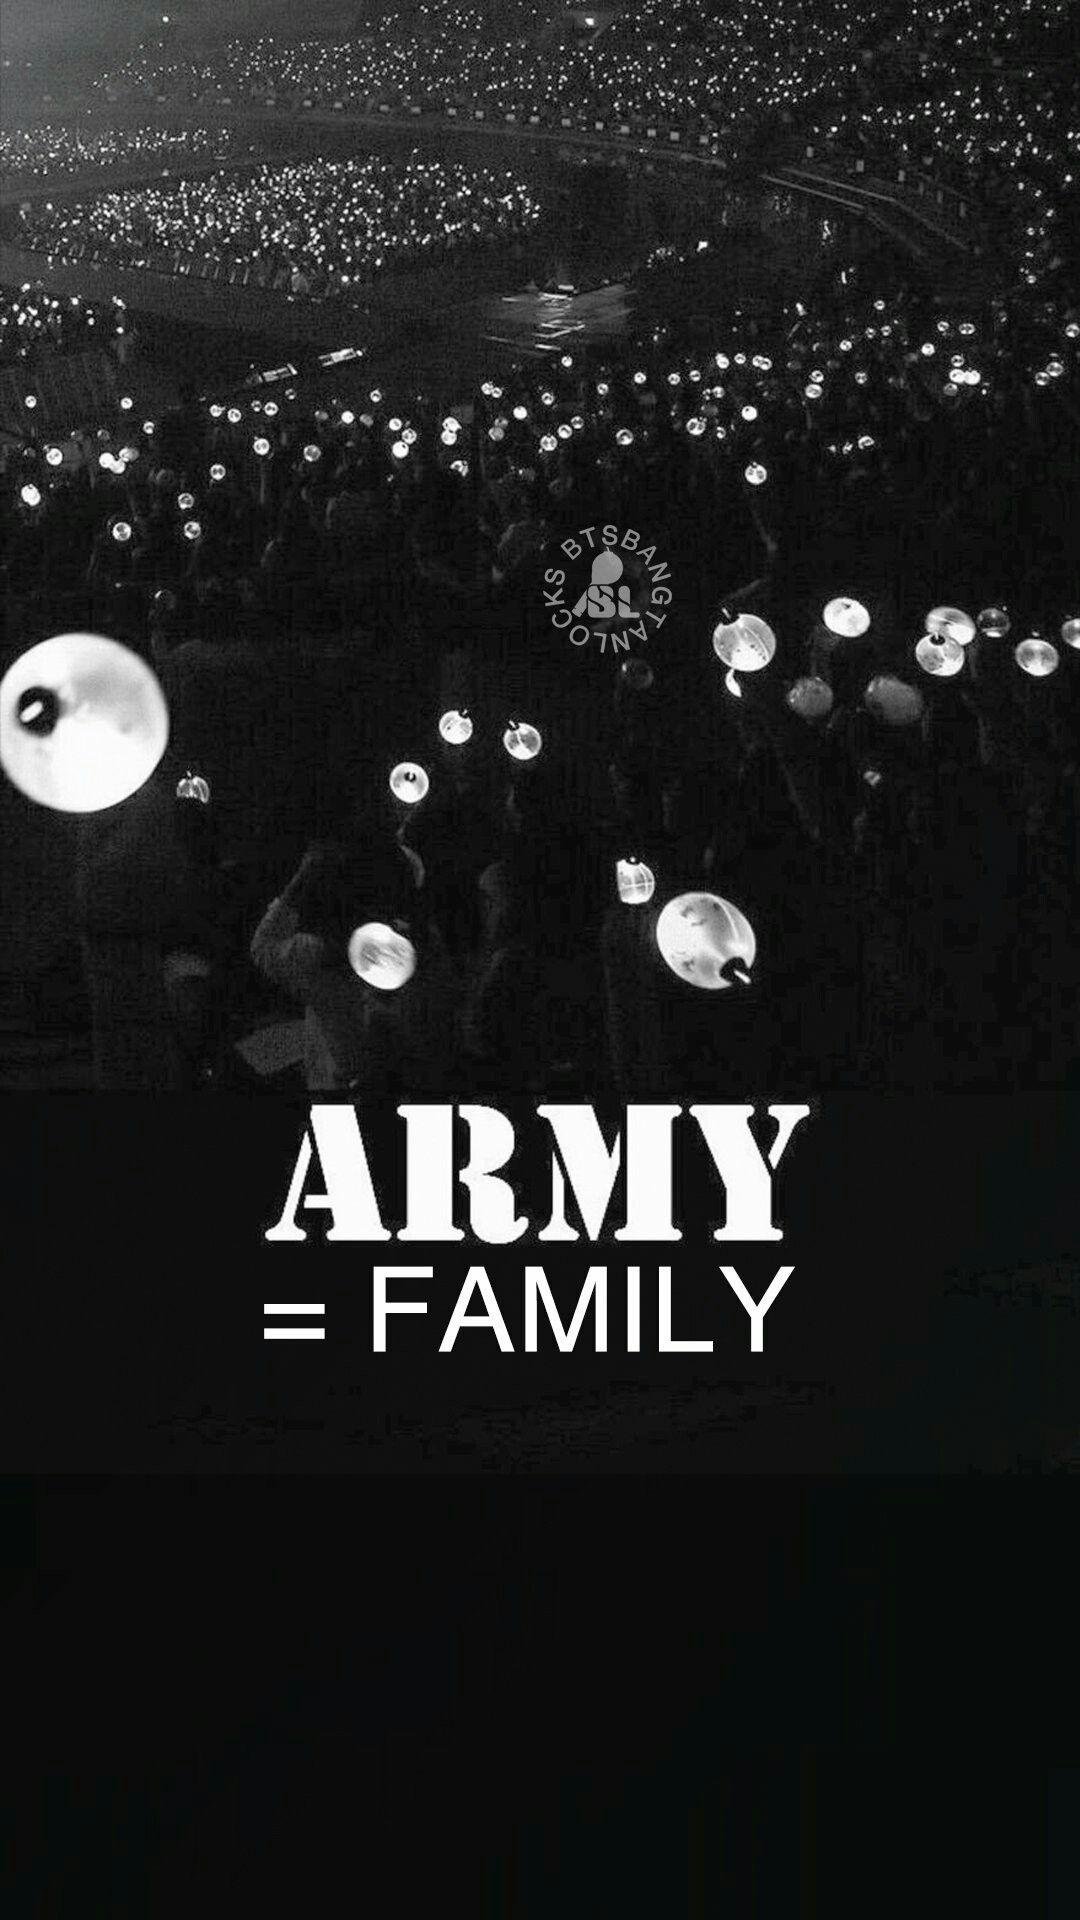 Bts army family